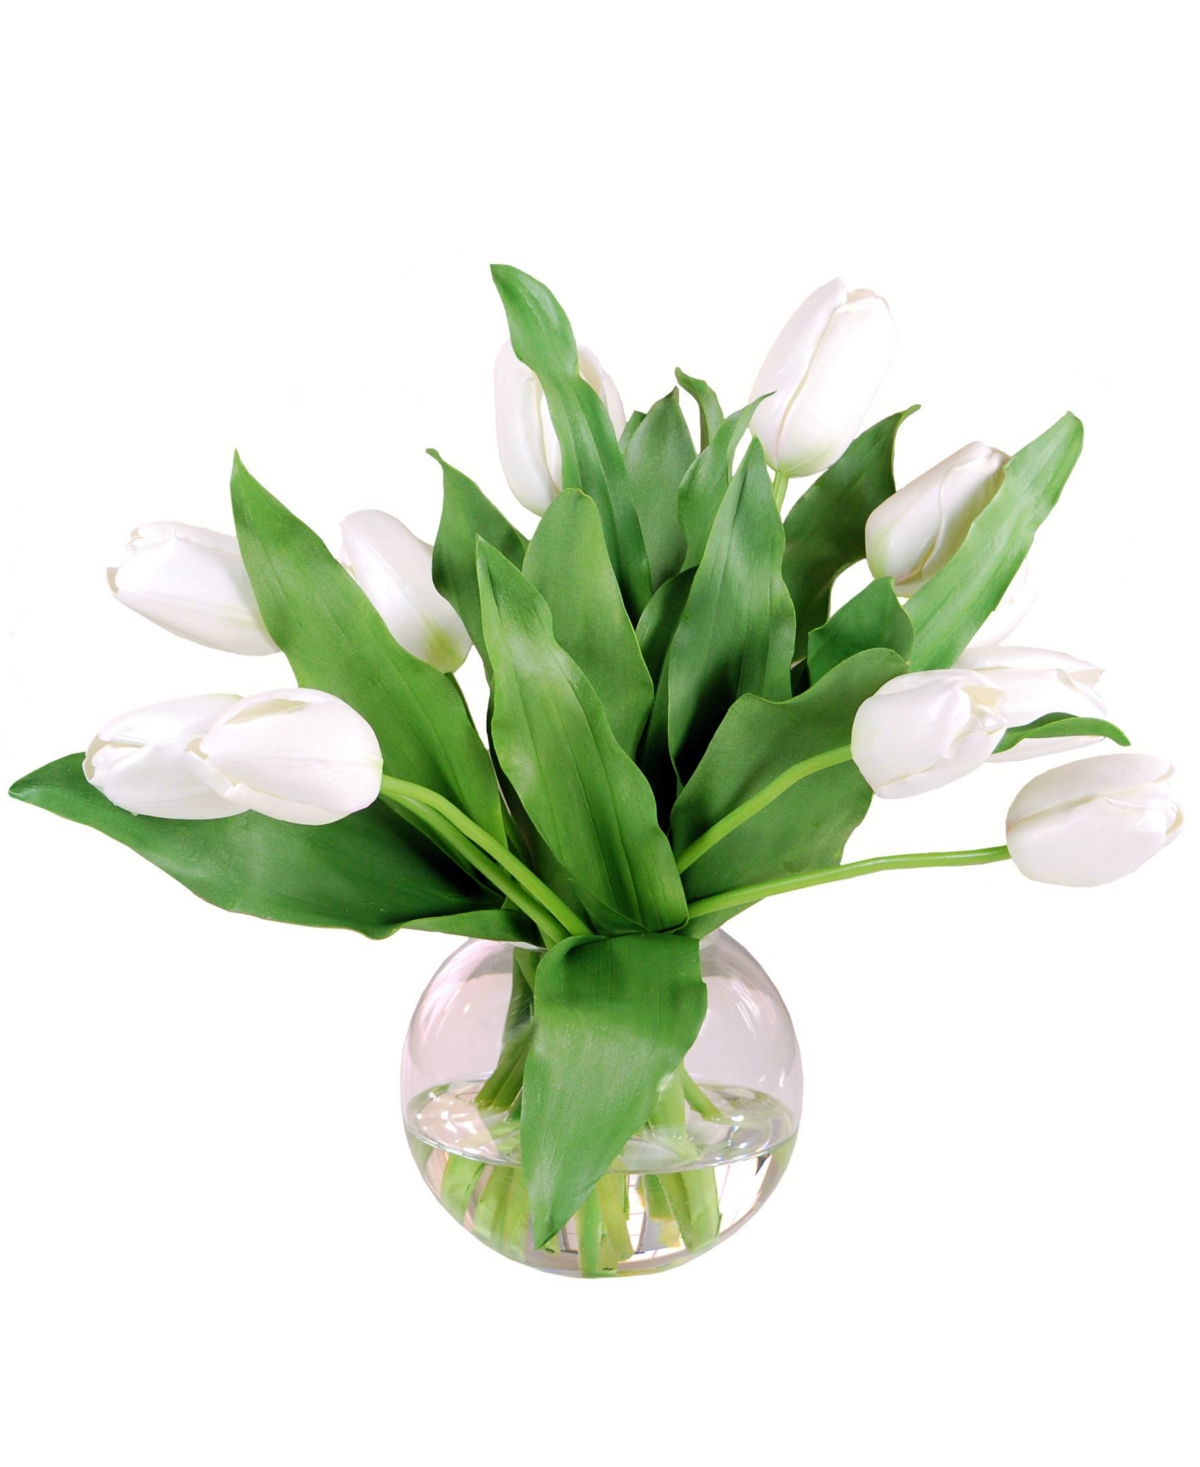 Permanent Botanicals Tulip in Bubble Bowl - White